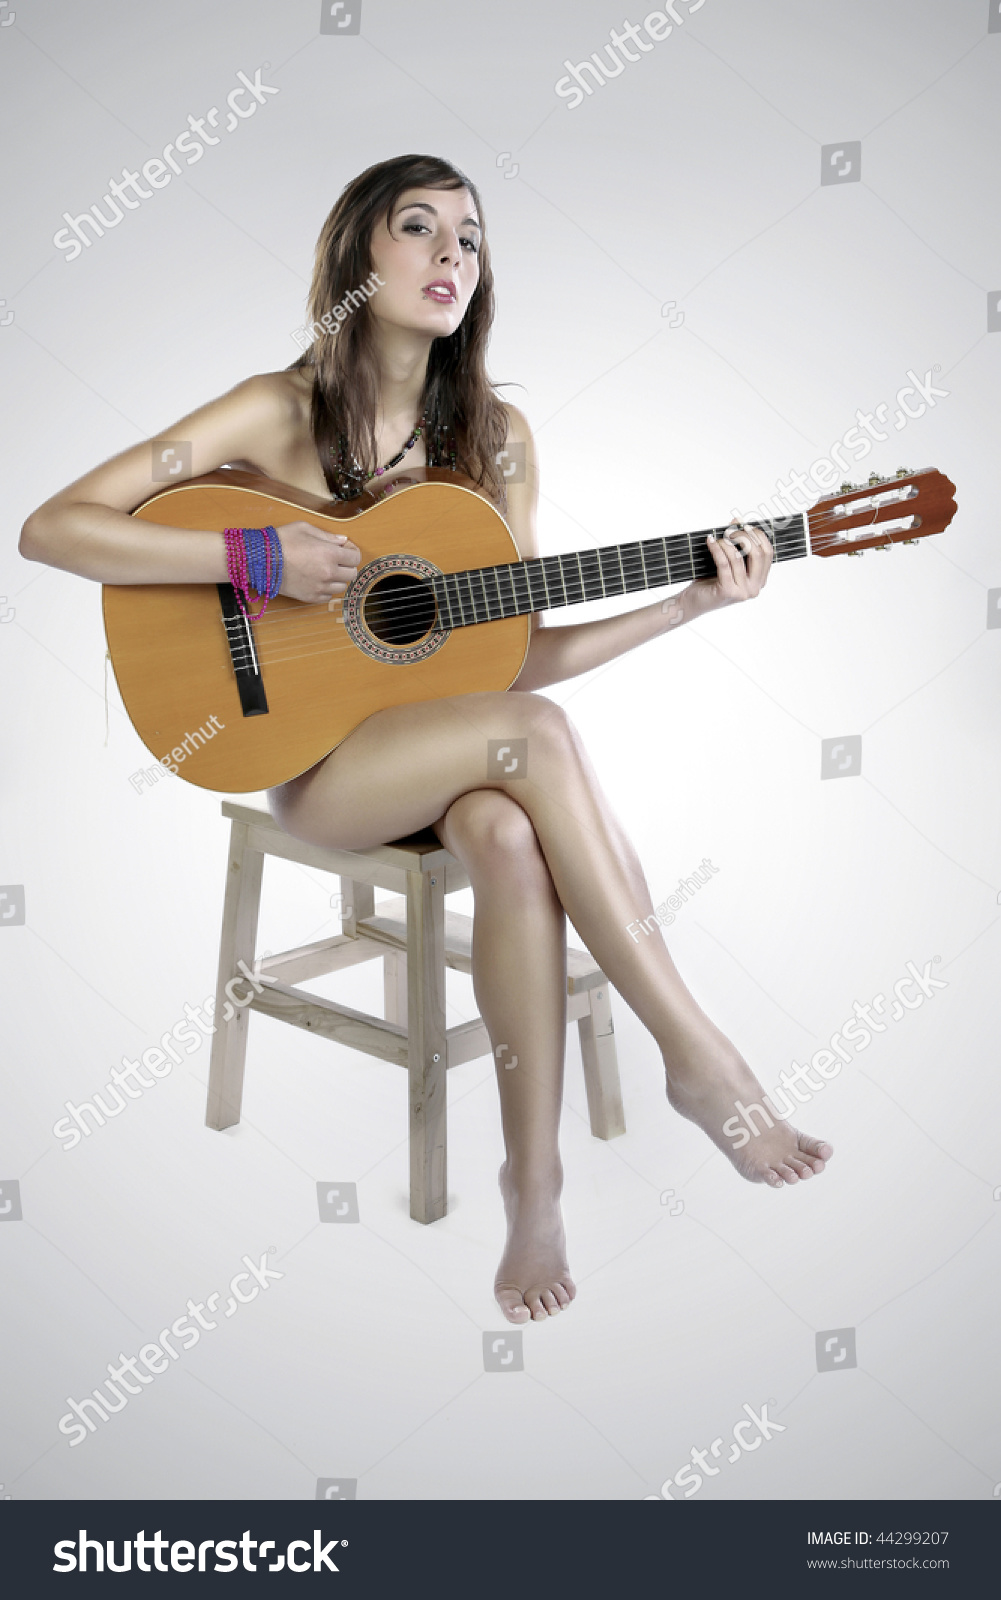 girl playing guitar topless